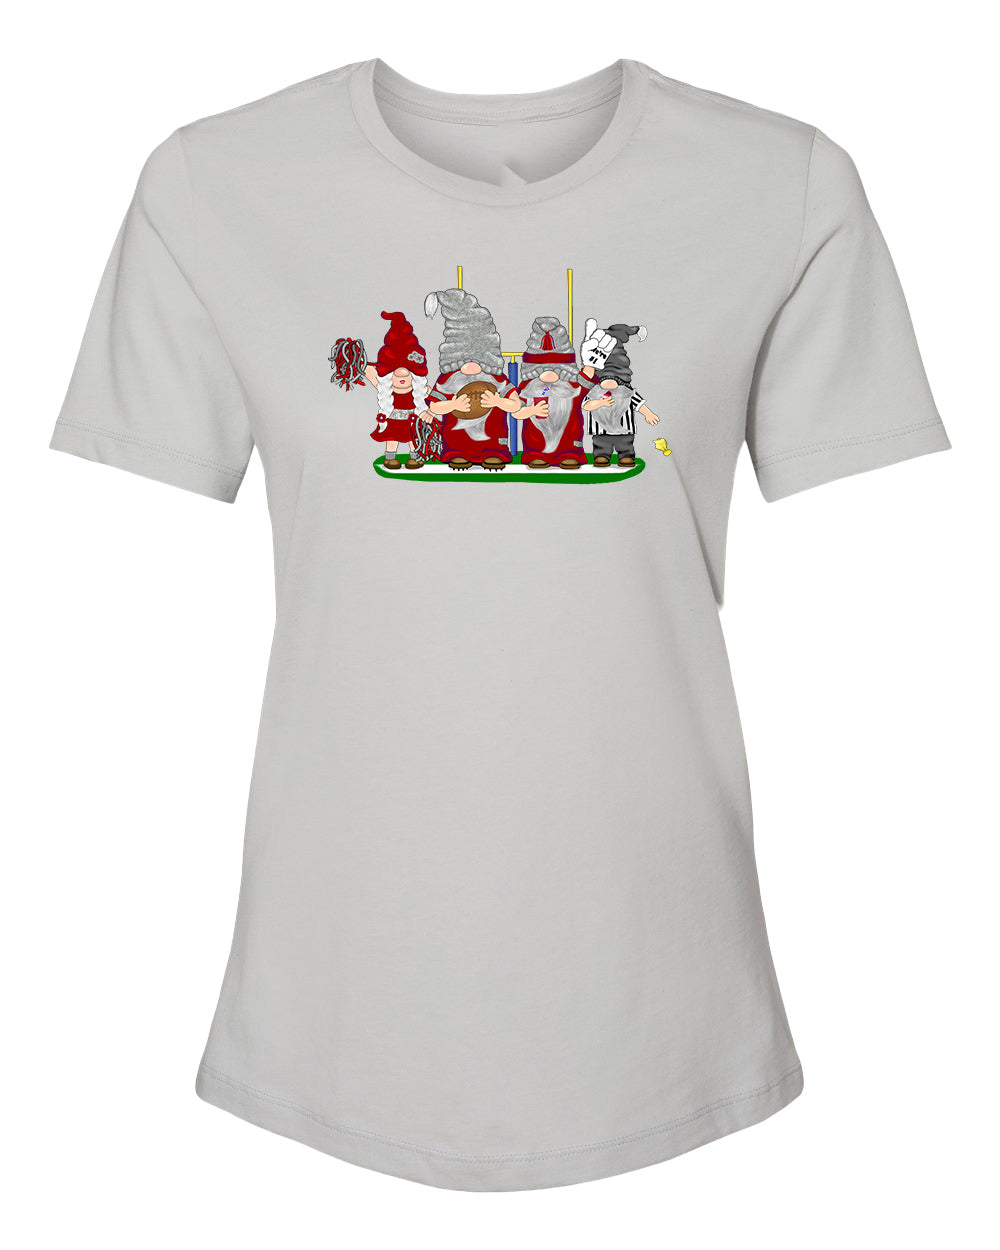 Crimson & Gray Football Gnomes on Women's T-shirt (similar to Pullman)